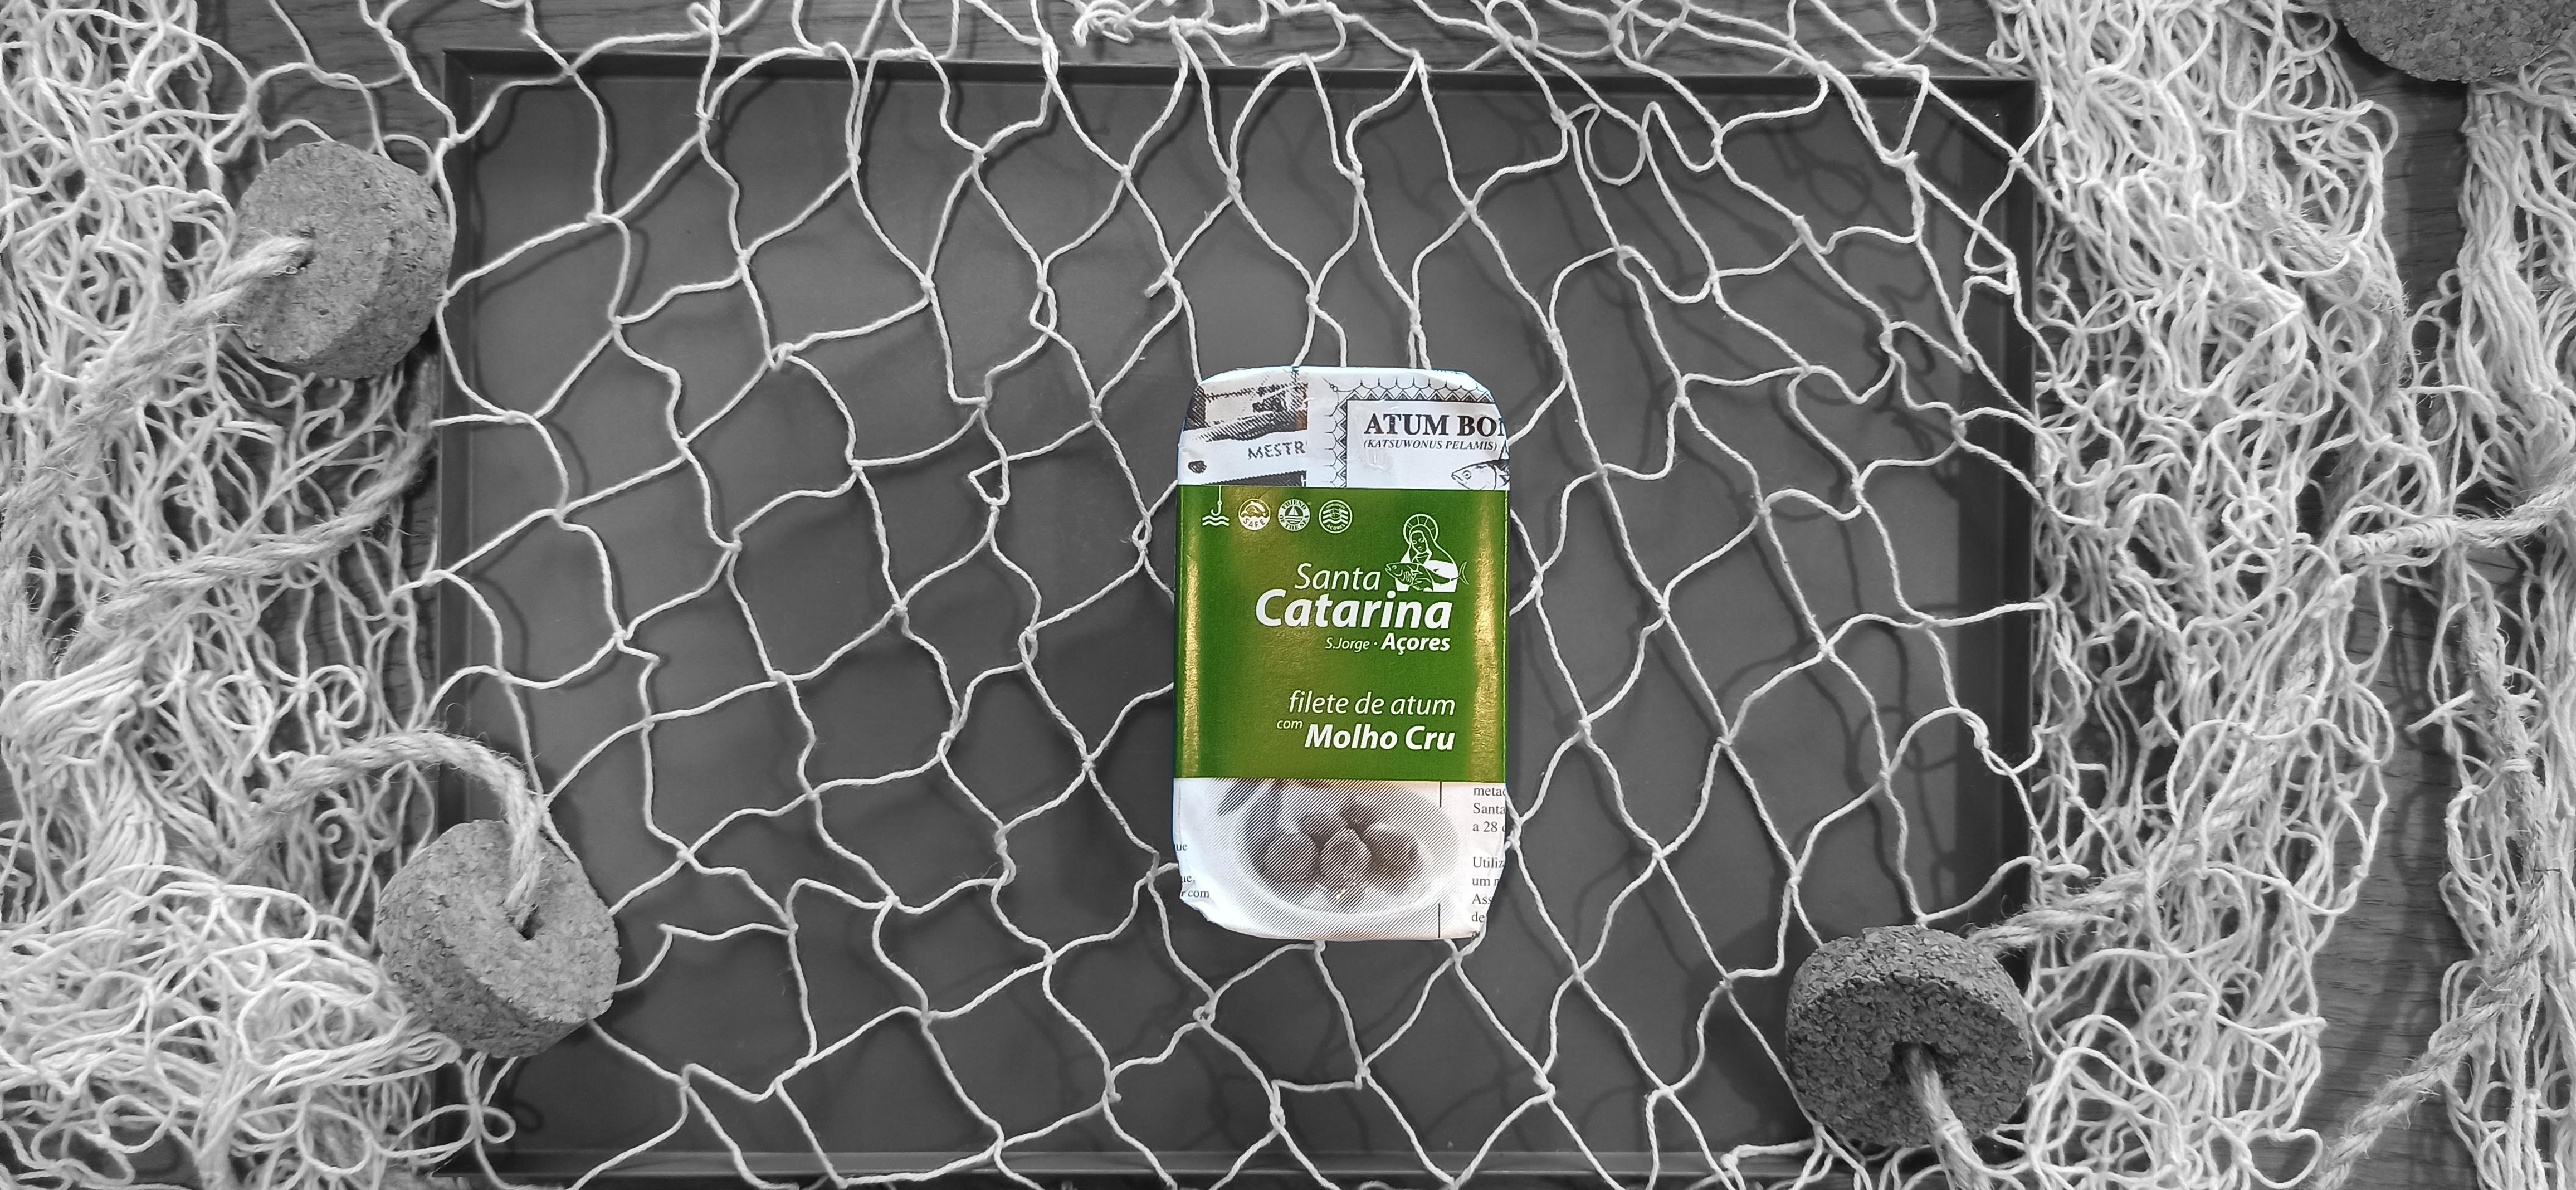 Santa Catarina - Thunfischfilet in Molho Cru (pikanter Sauce)